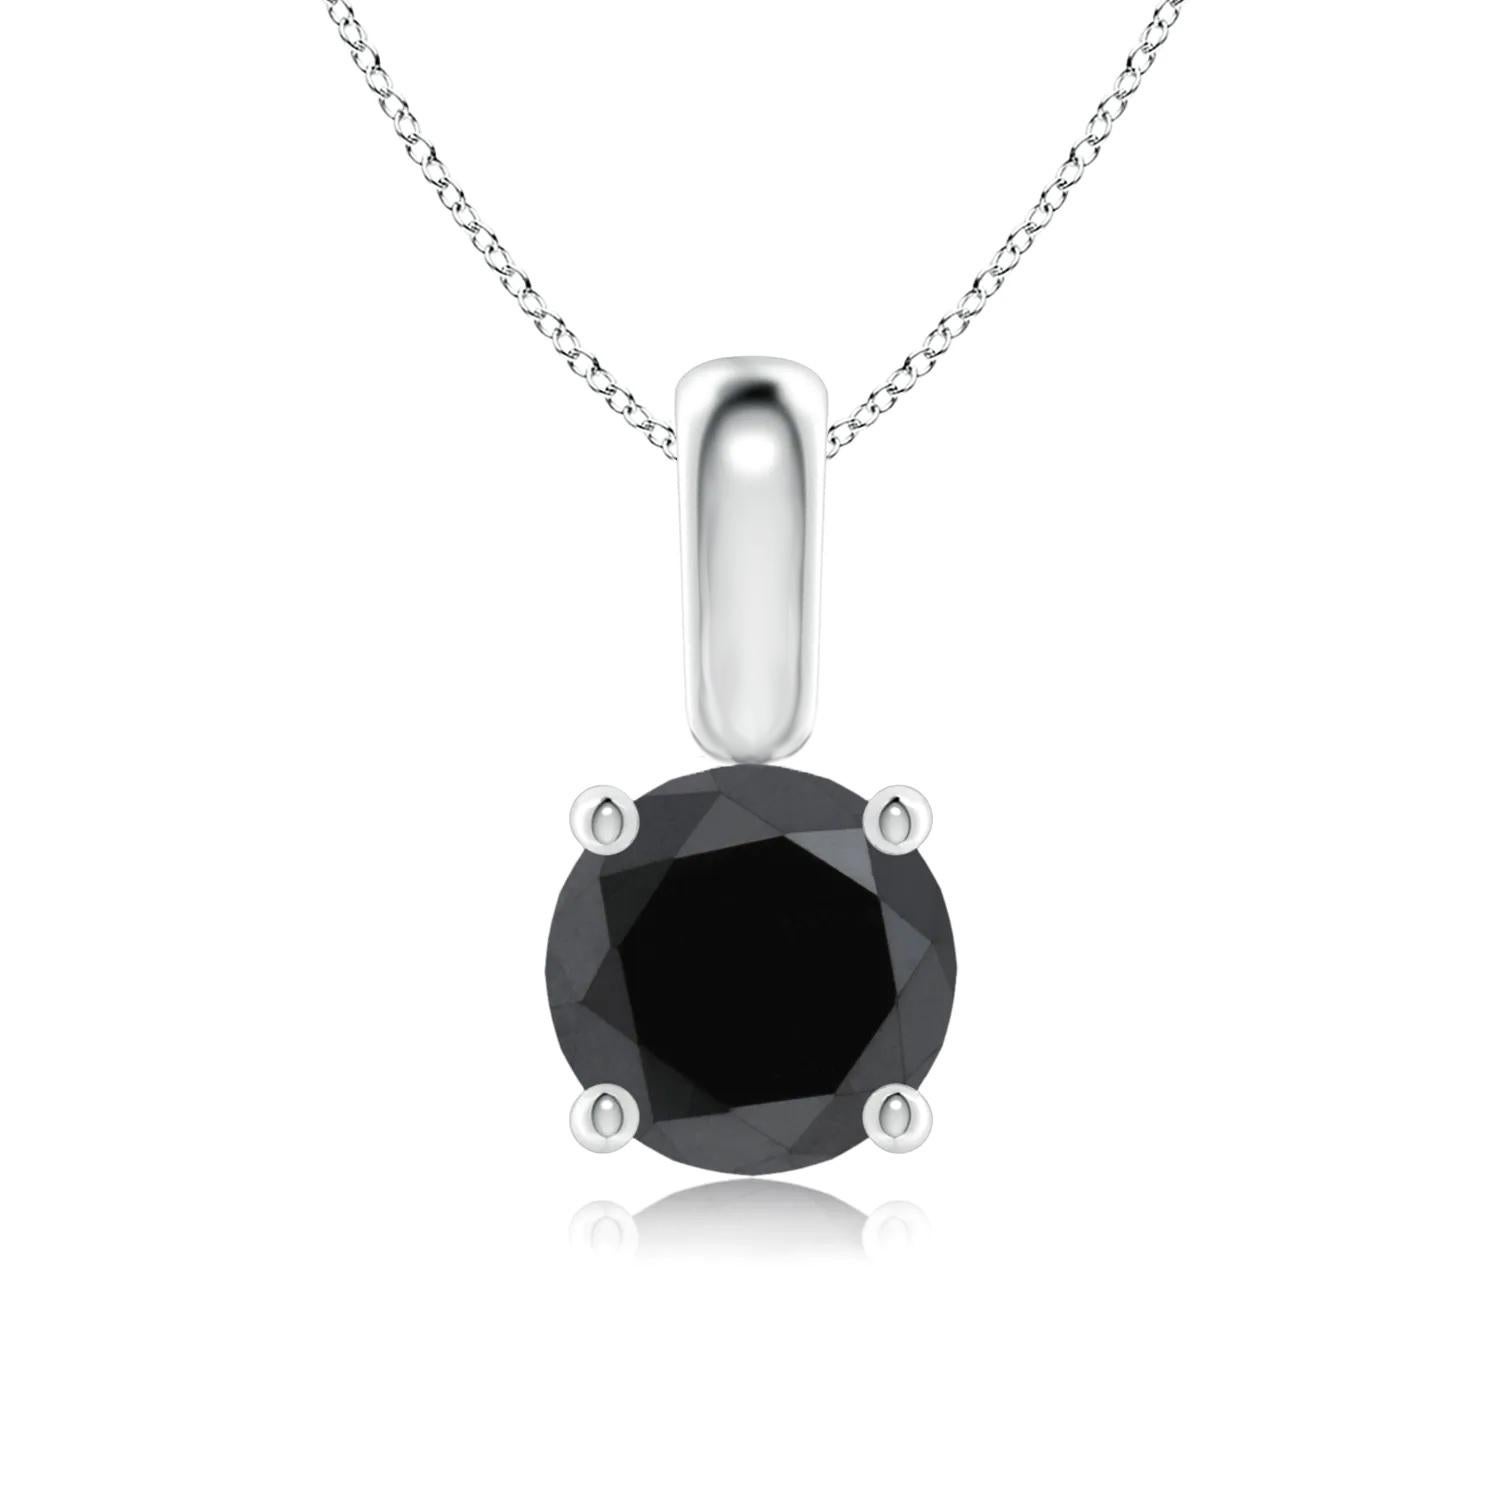 Contemporary 1.76 Carat Round Black Diamond Solitaire Pendant Necklace in 14K White Gold